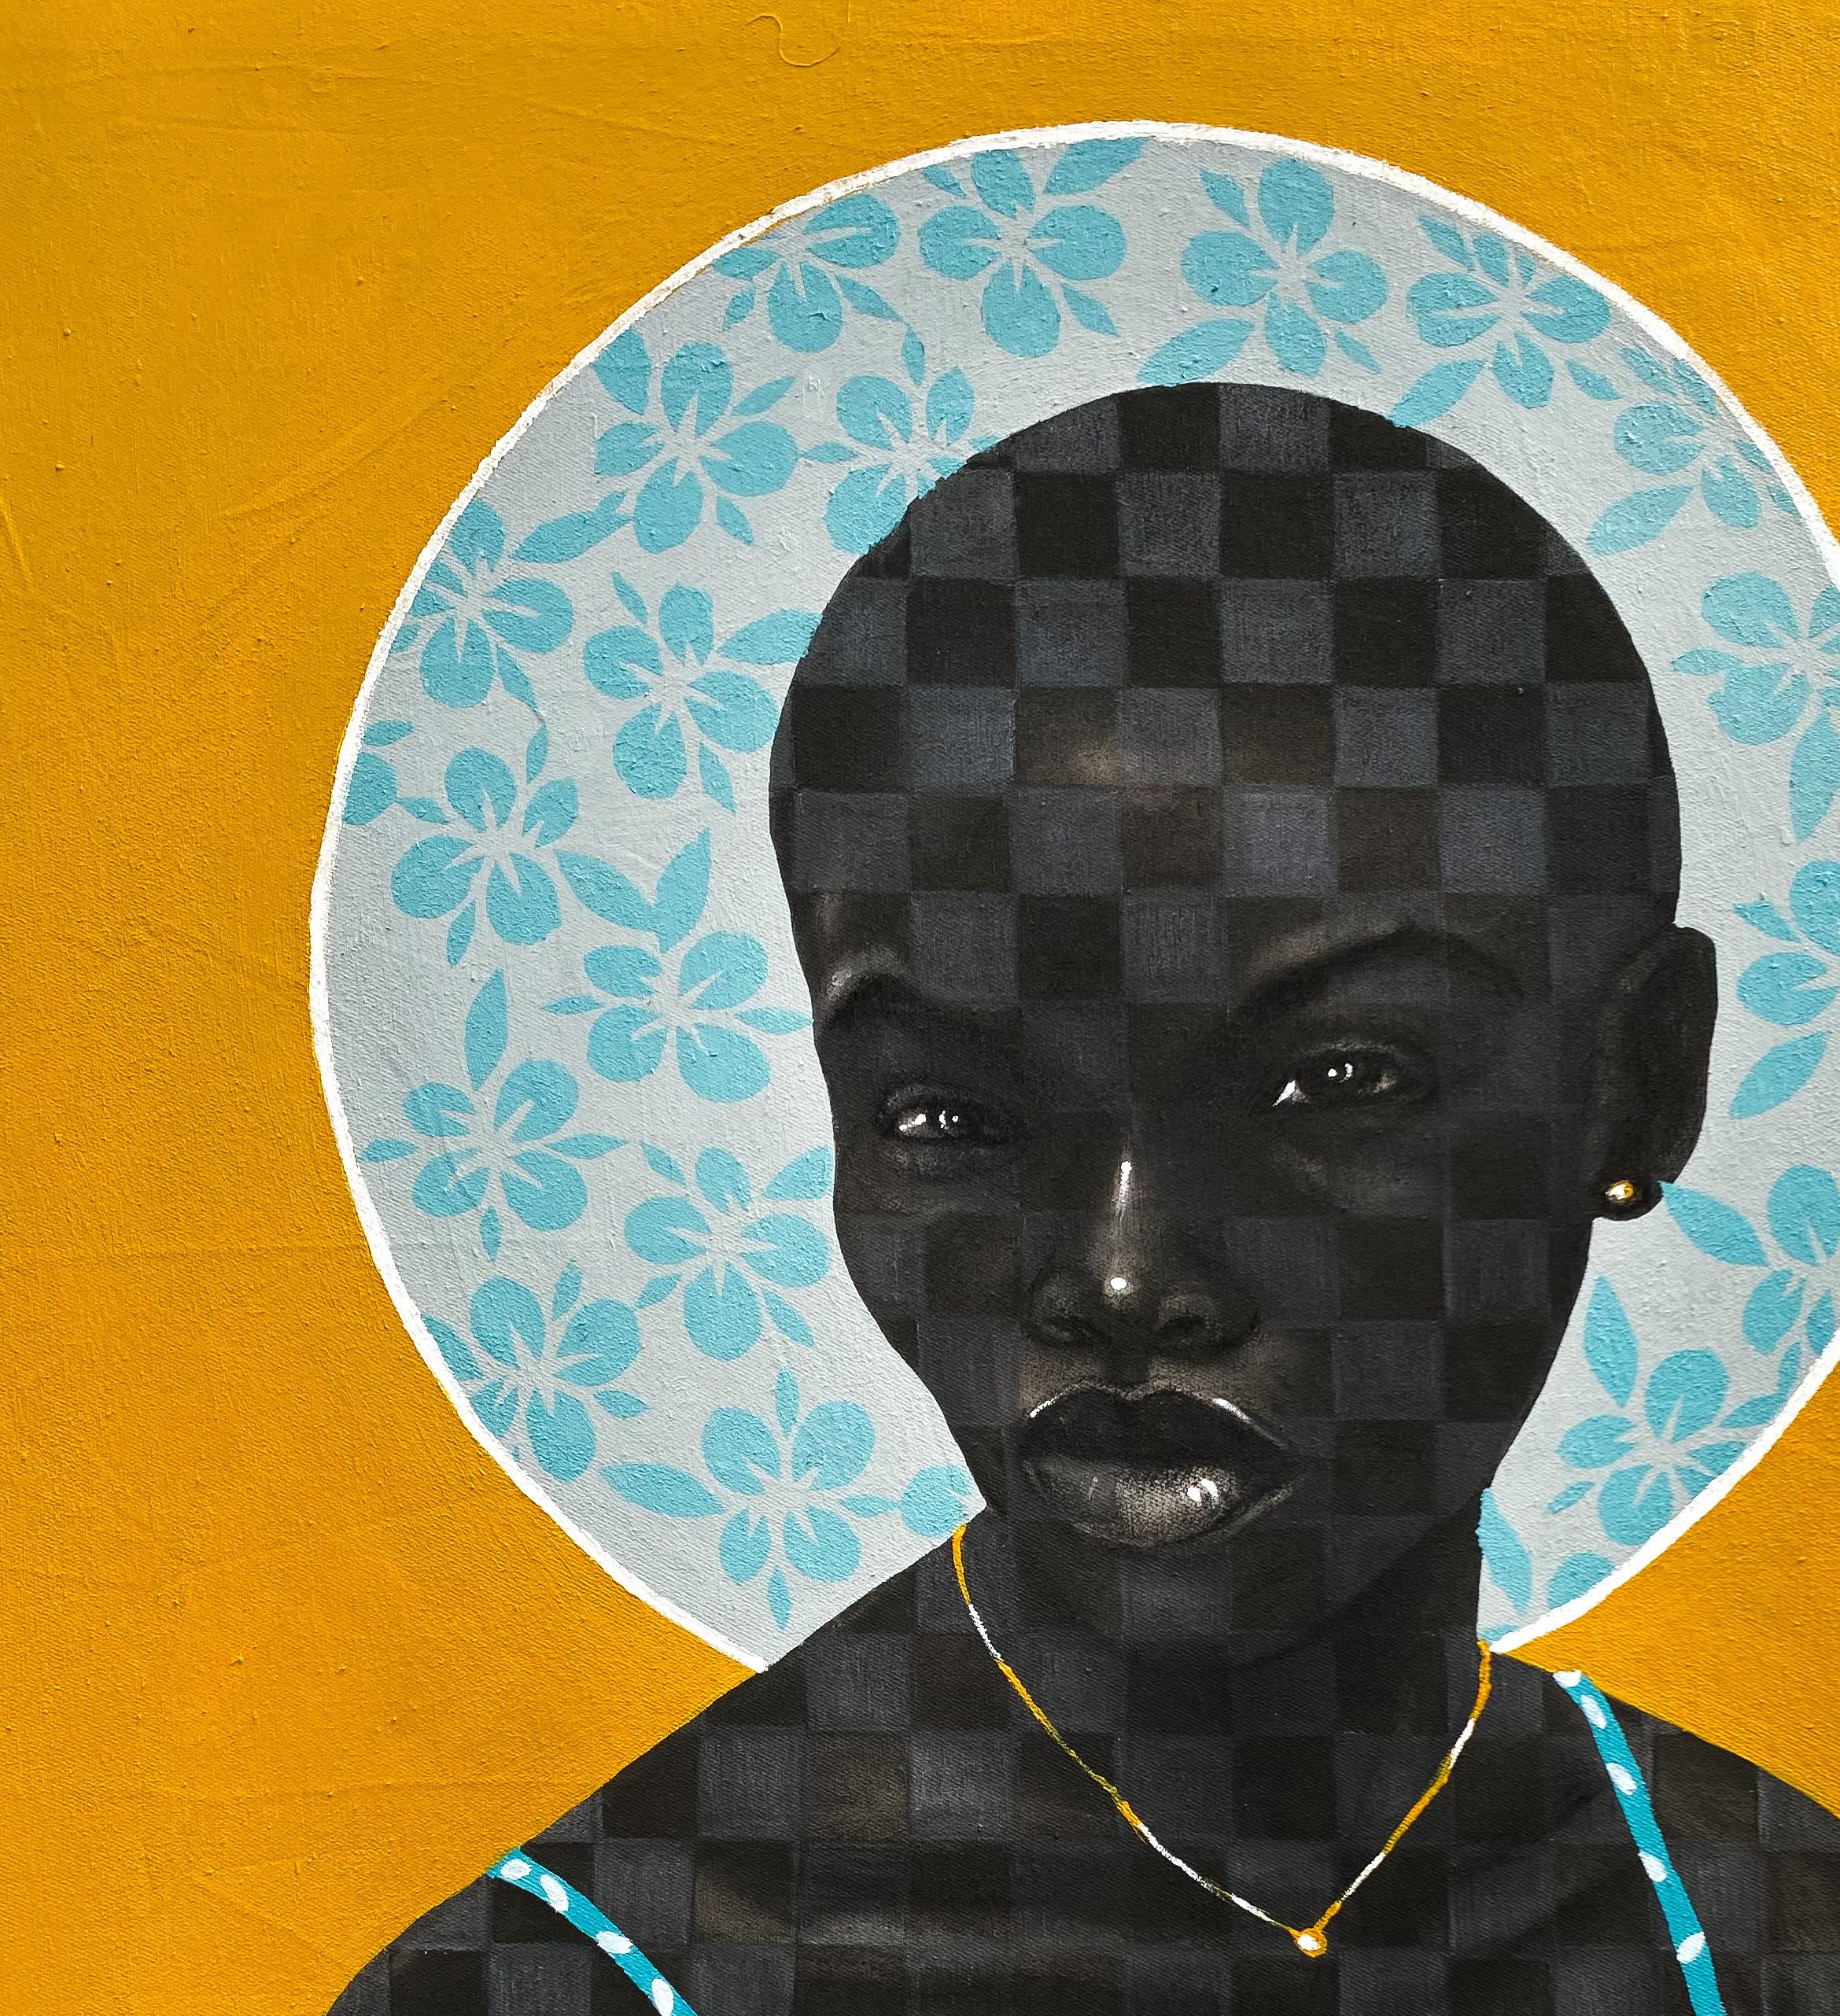 Just Soar, Don't Hesitate - Painting by Oluwatosin Ogunniyi 